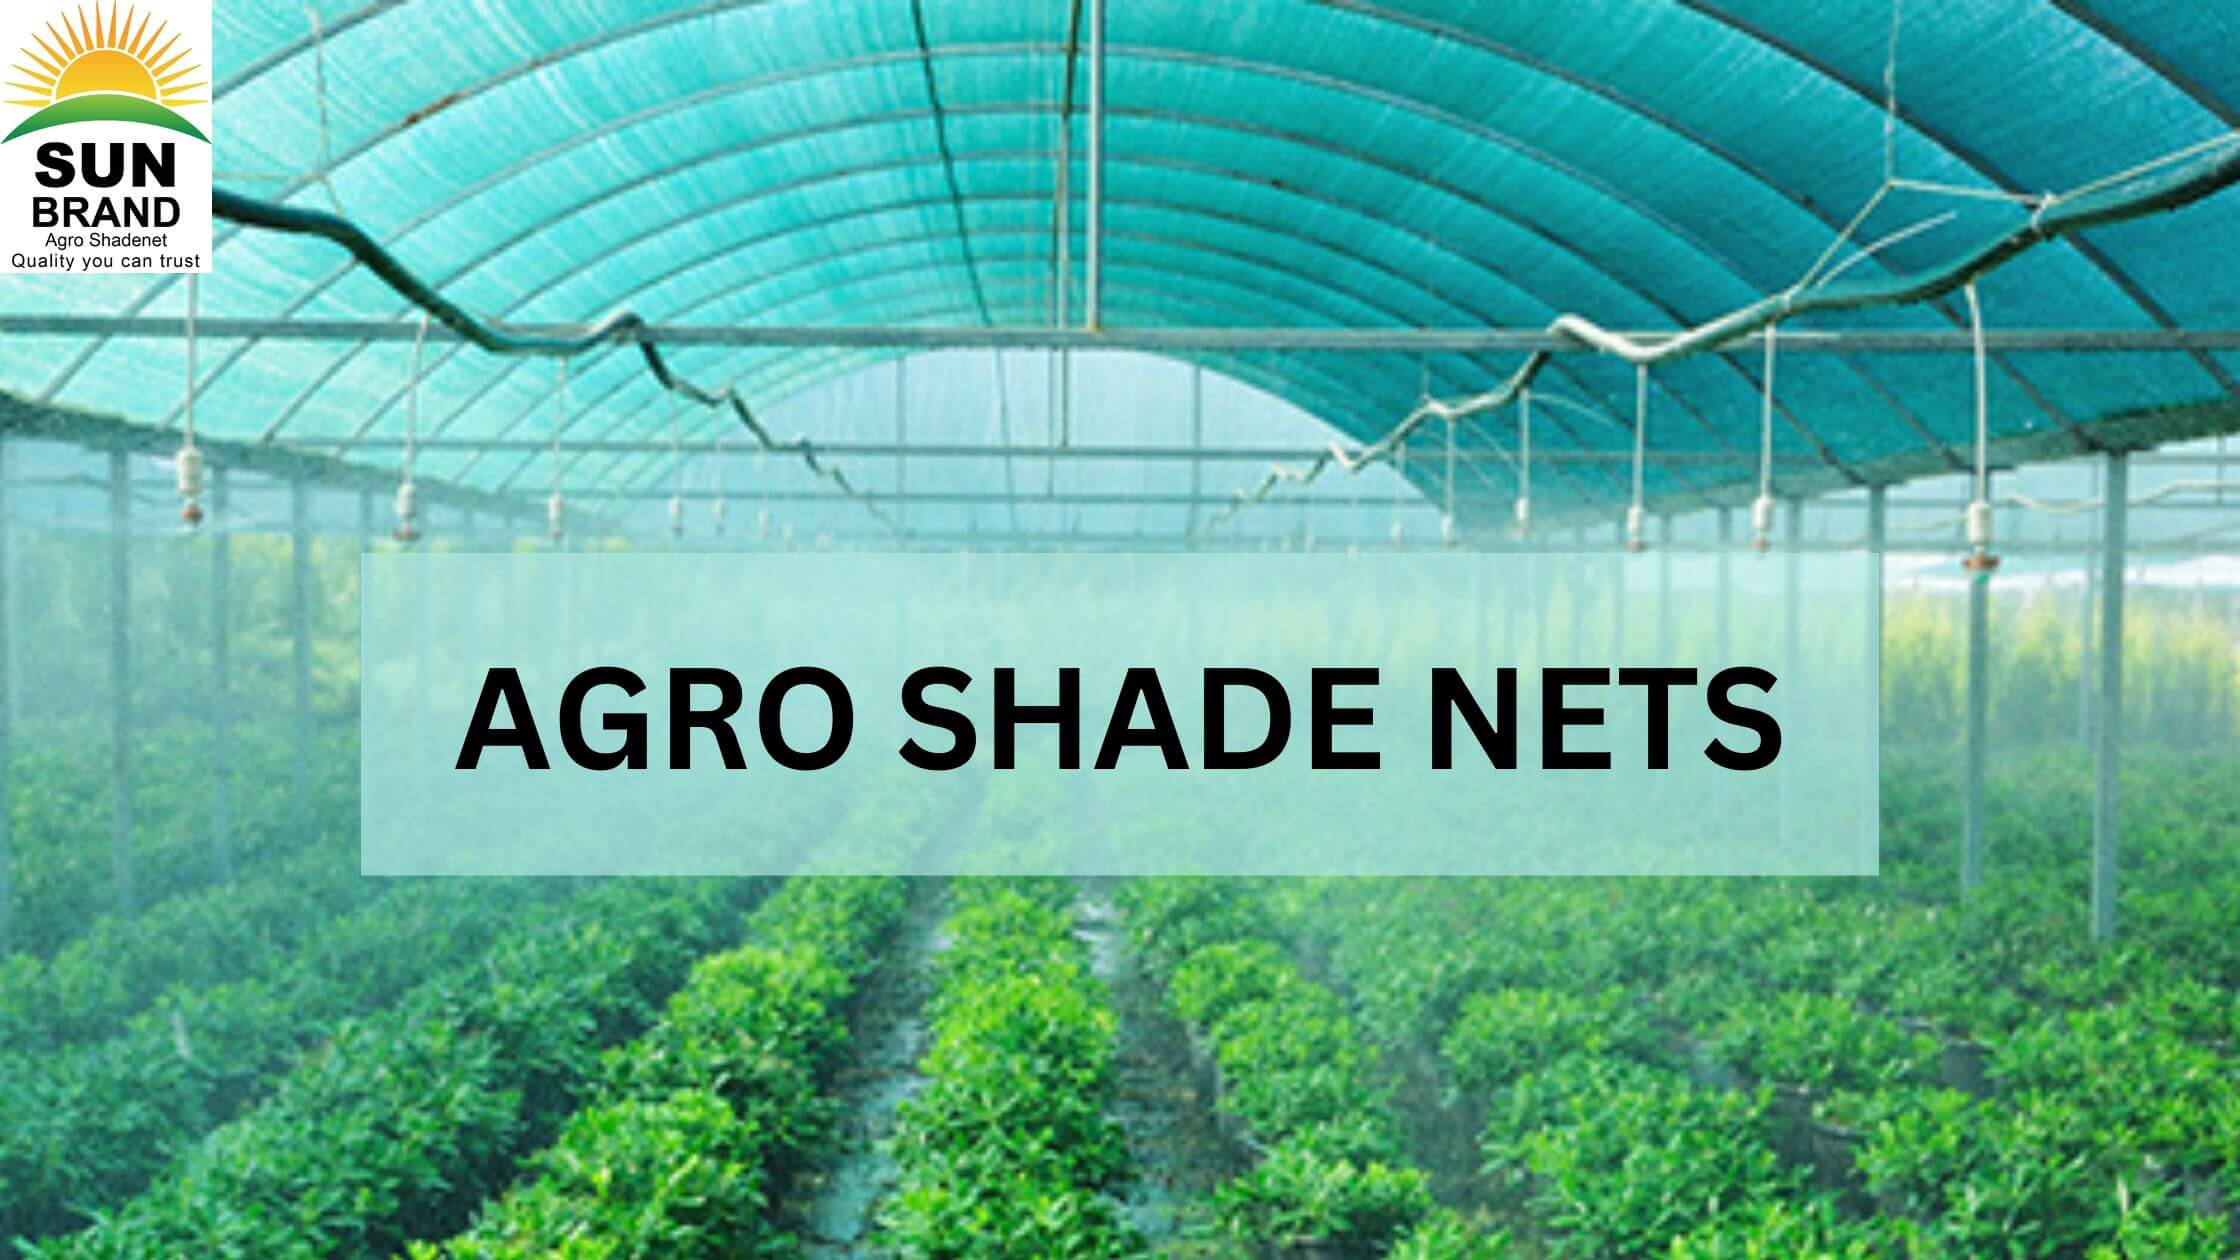 Agro Shade Nets, Sun Brand Agro Shade Net